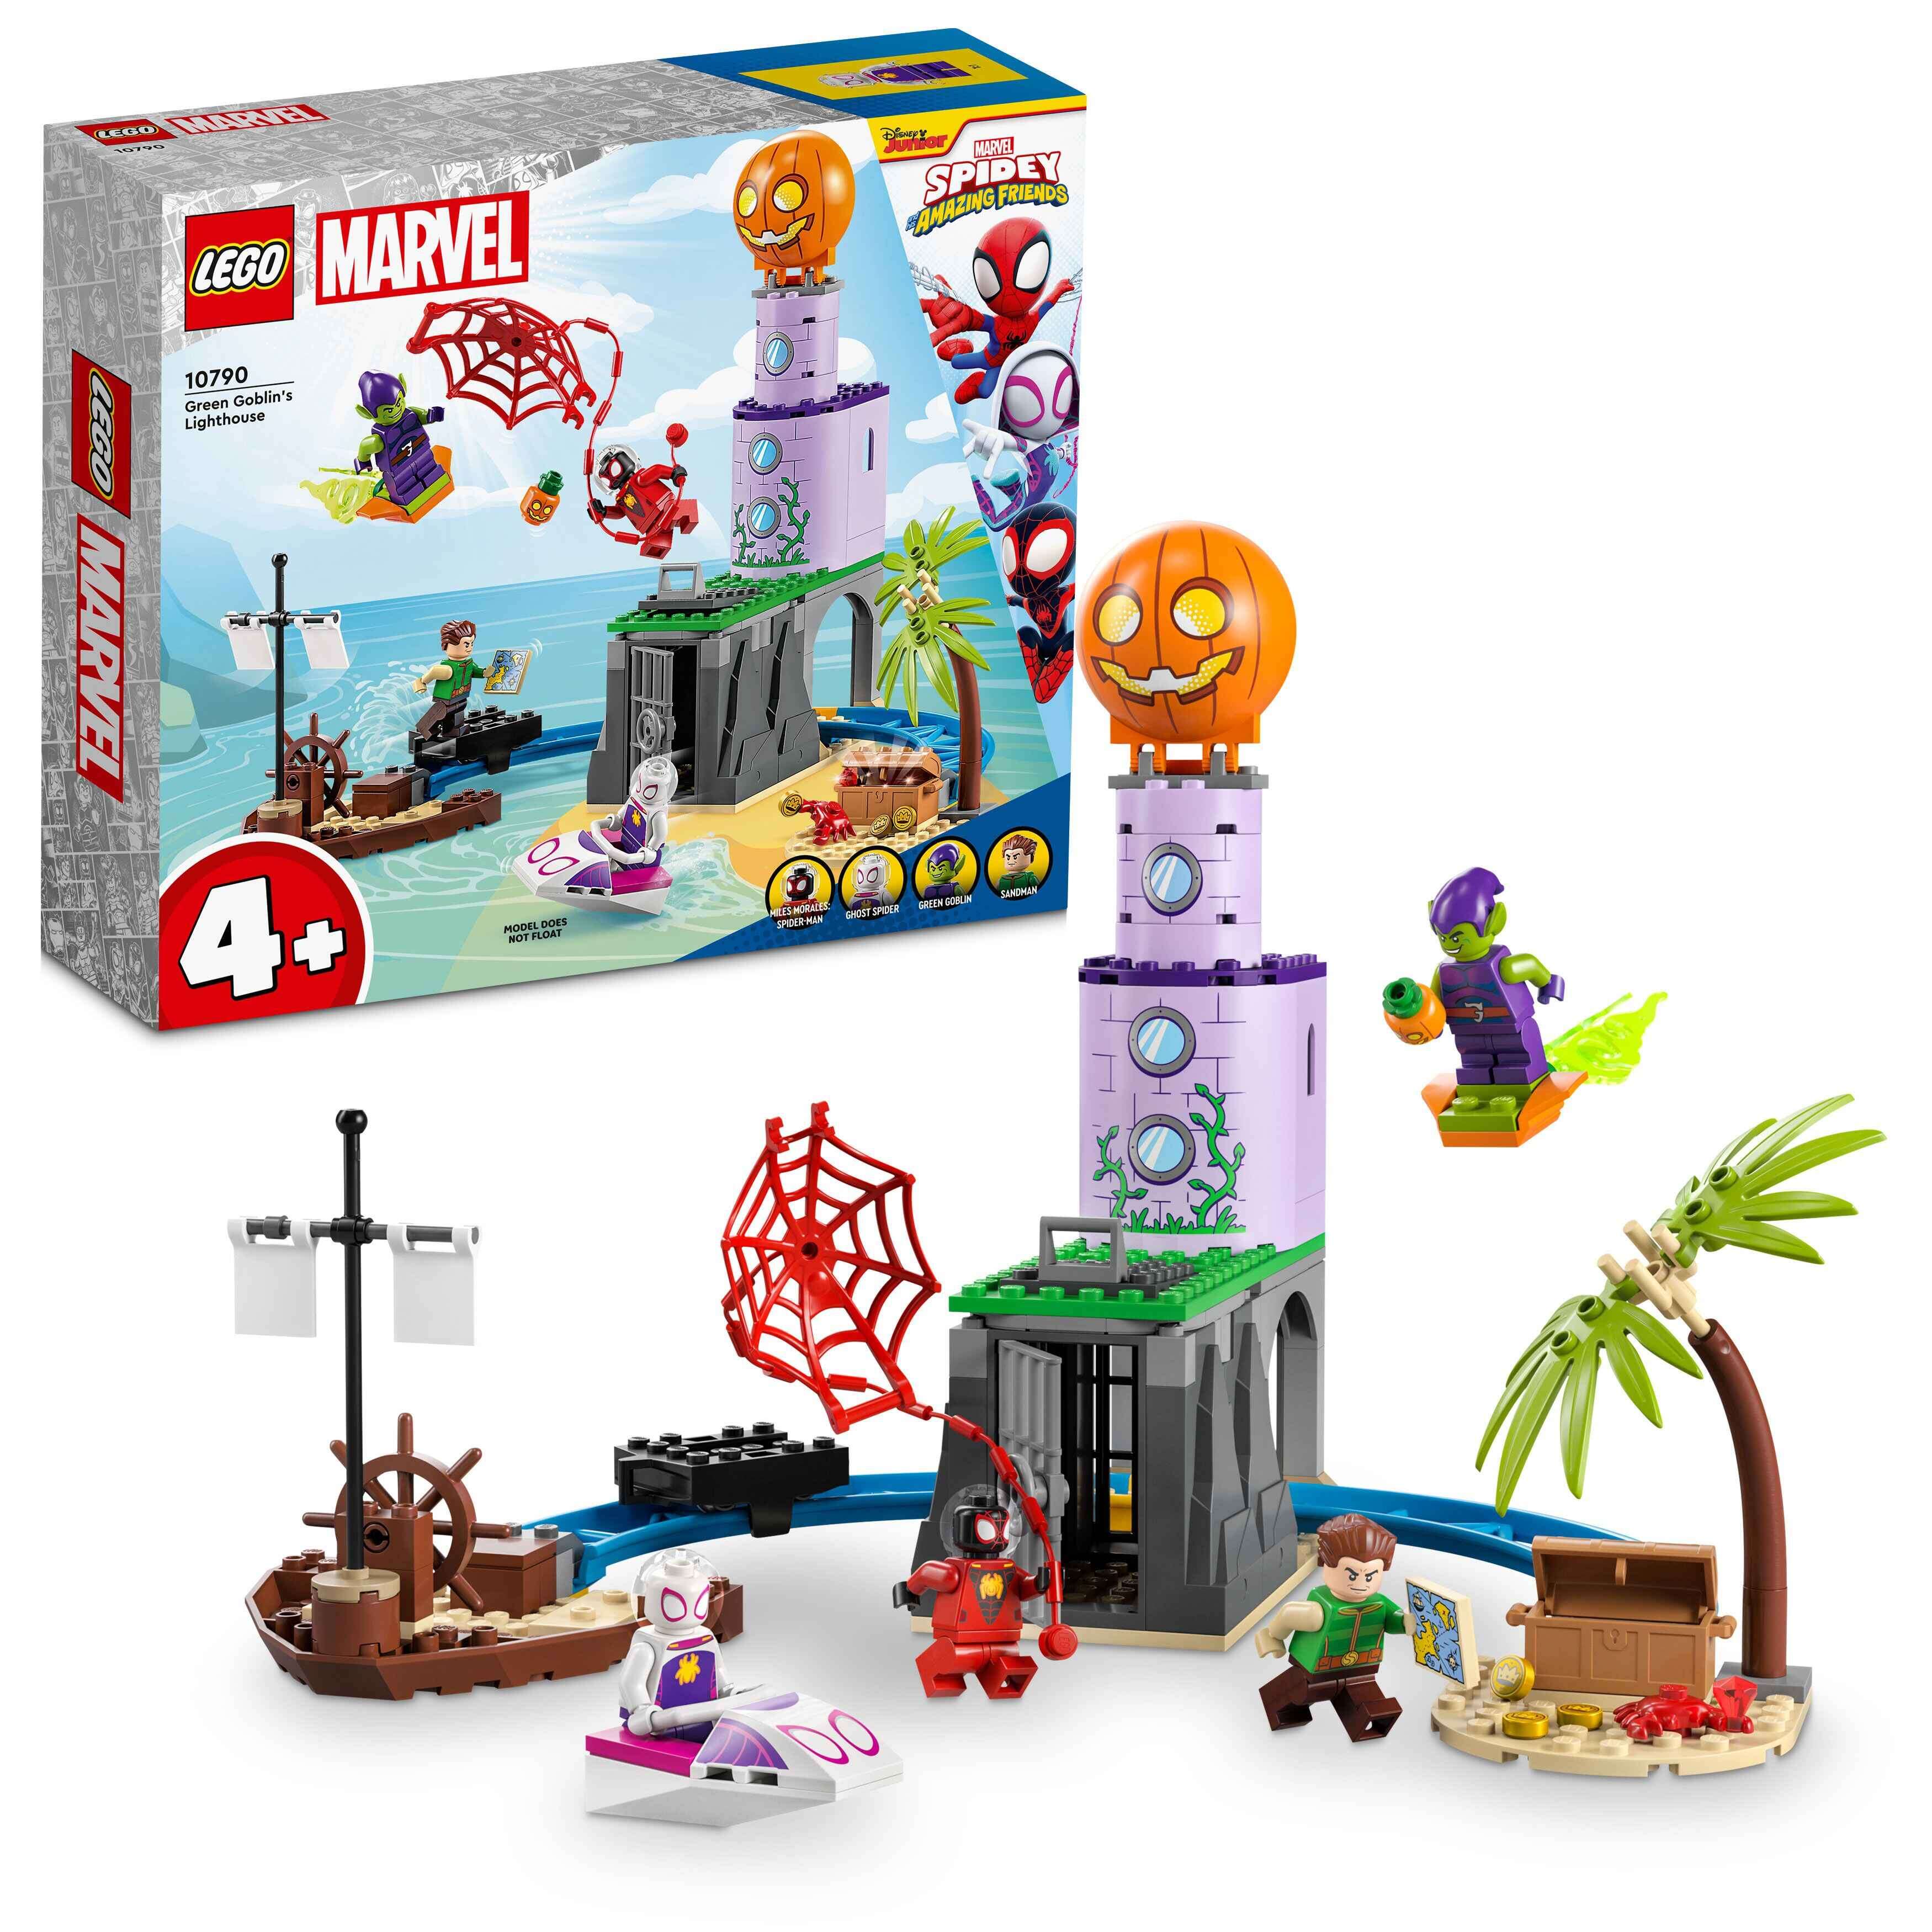 LEGO 10790 Marvel Spideys Team an Green Goblins Leuchtturm, 4 Minifiguren